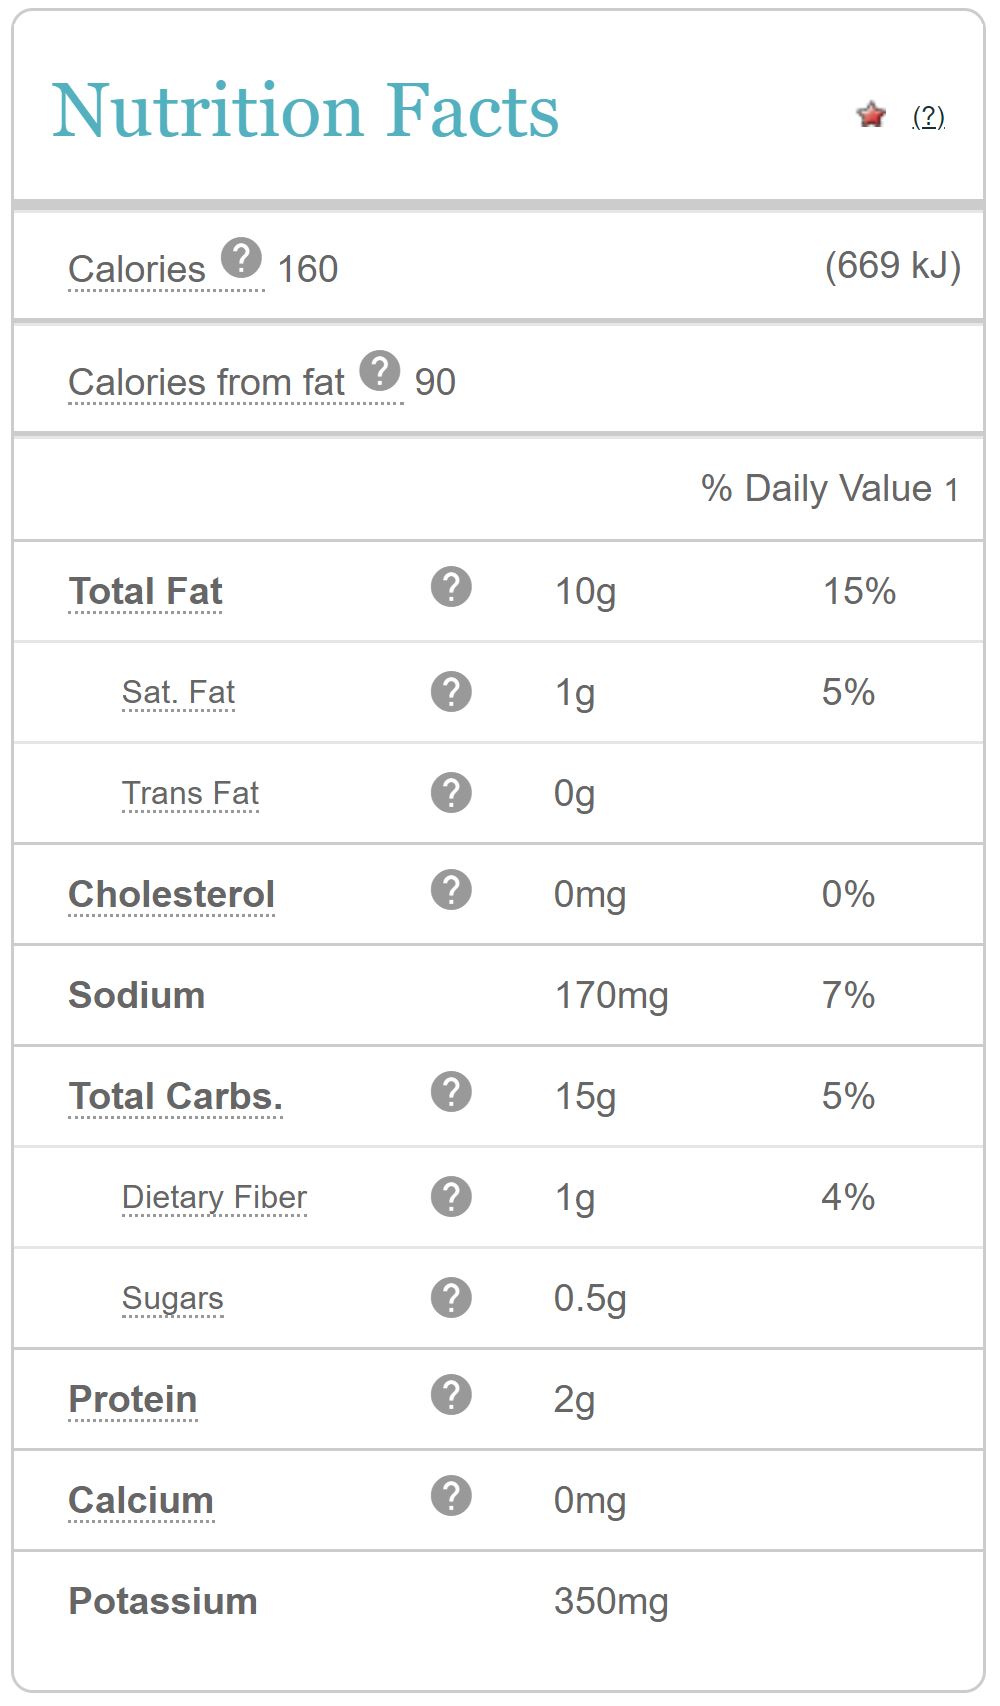 image from www.calorieking.com